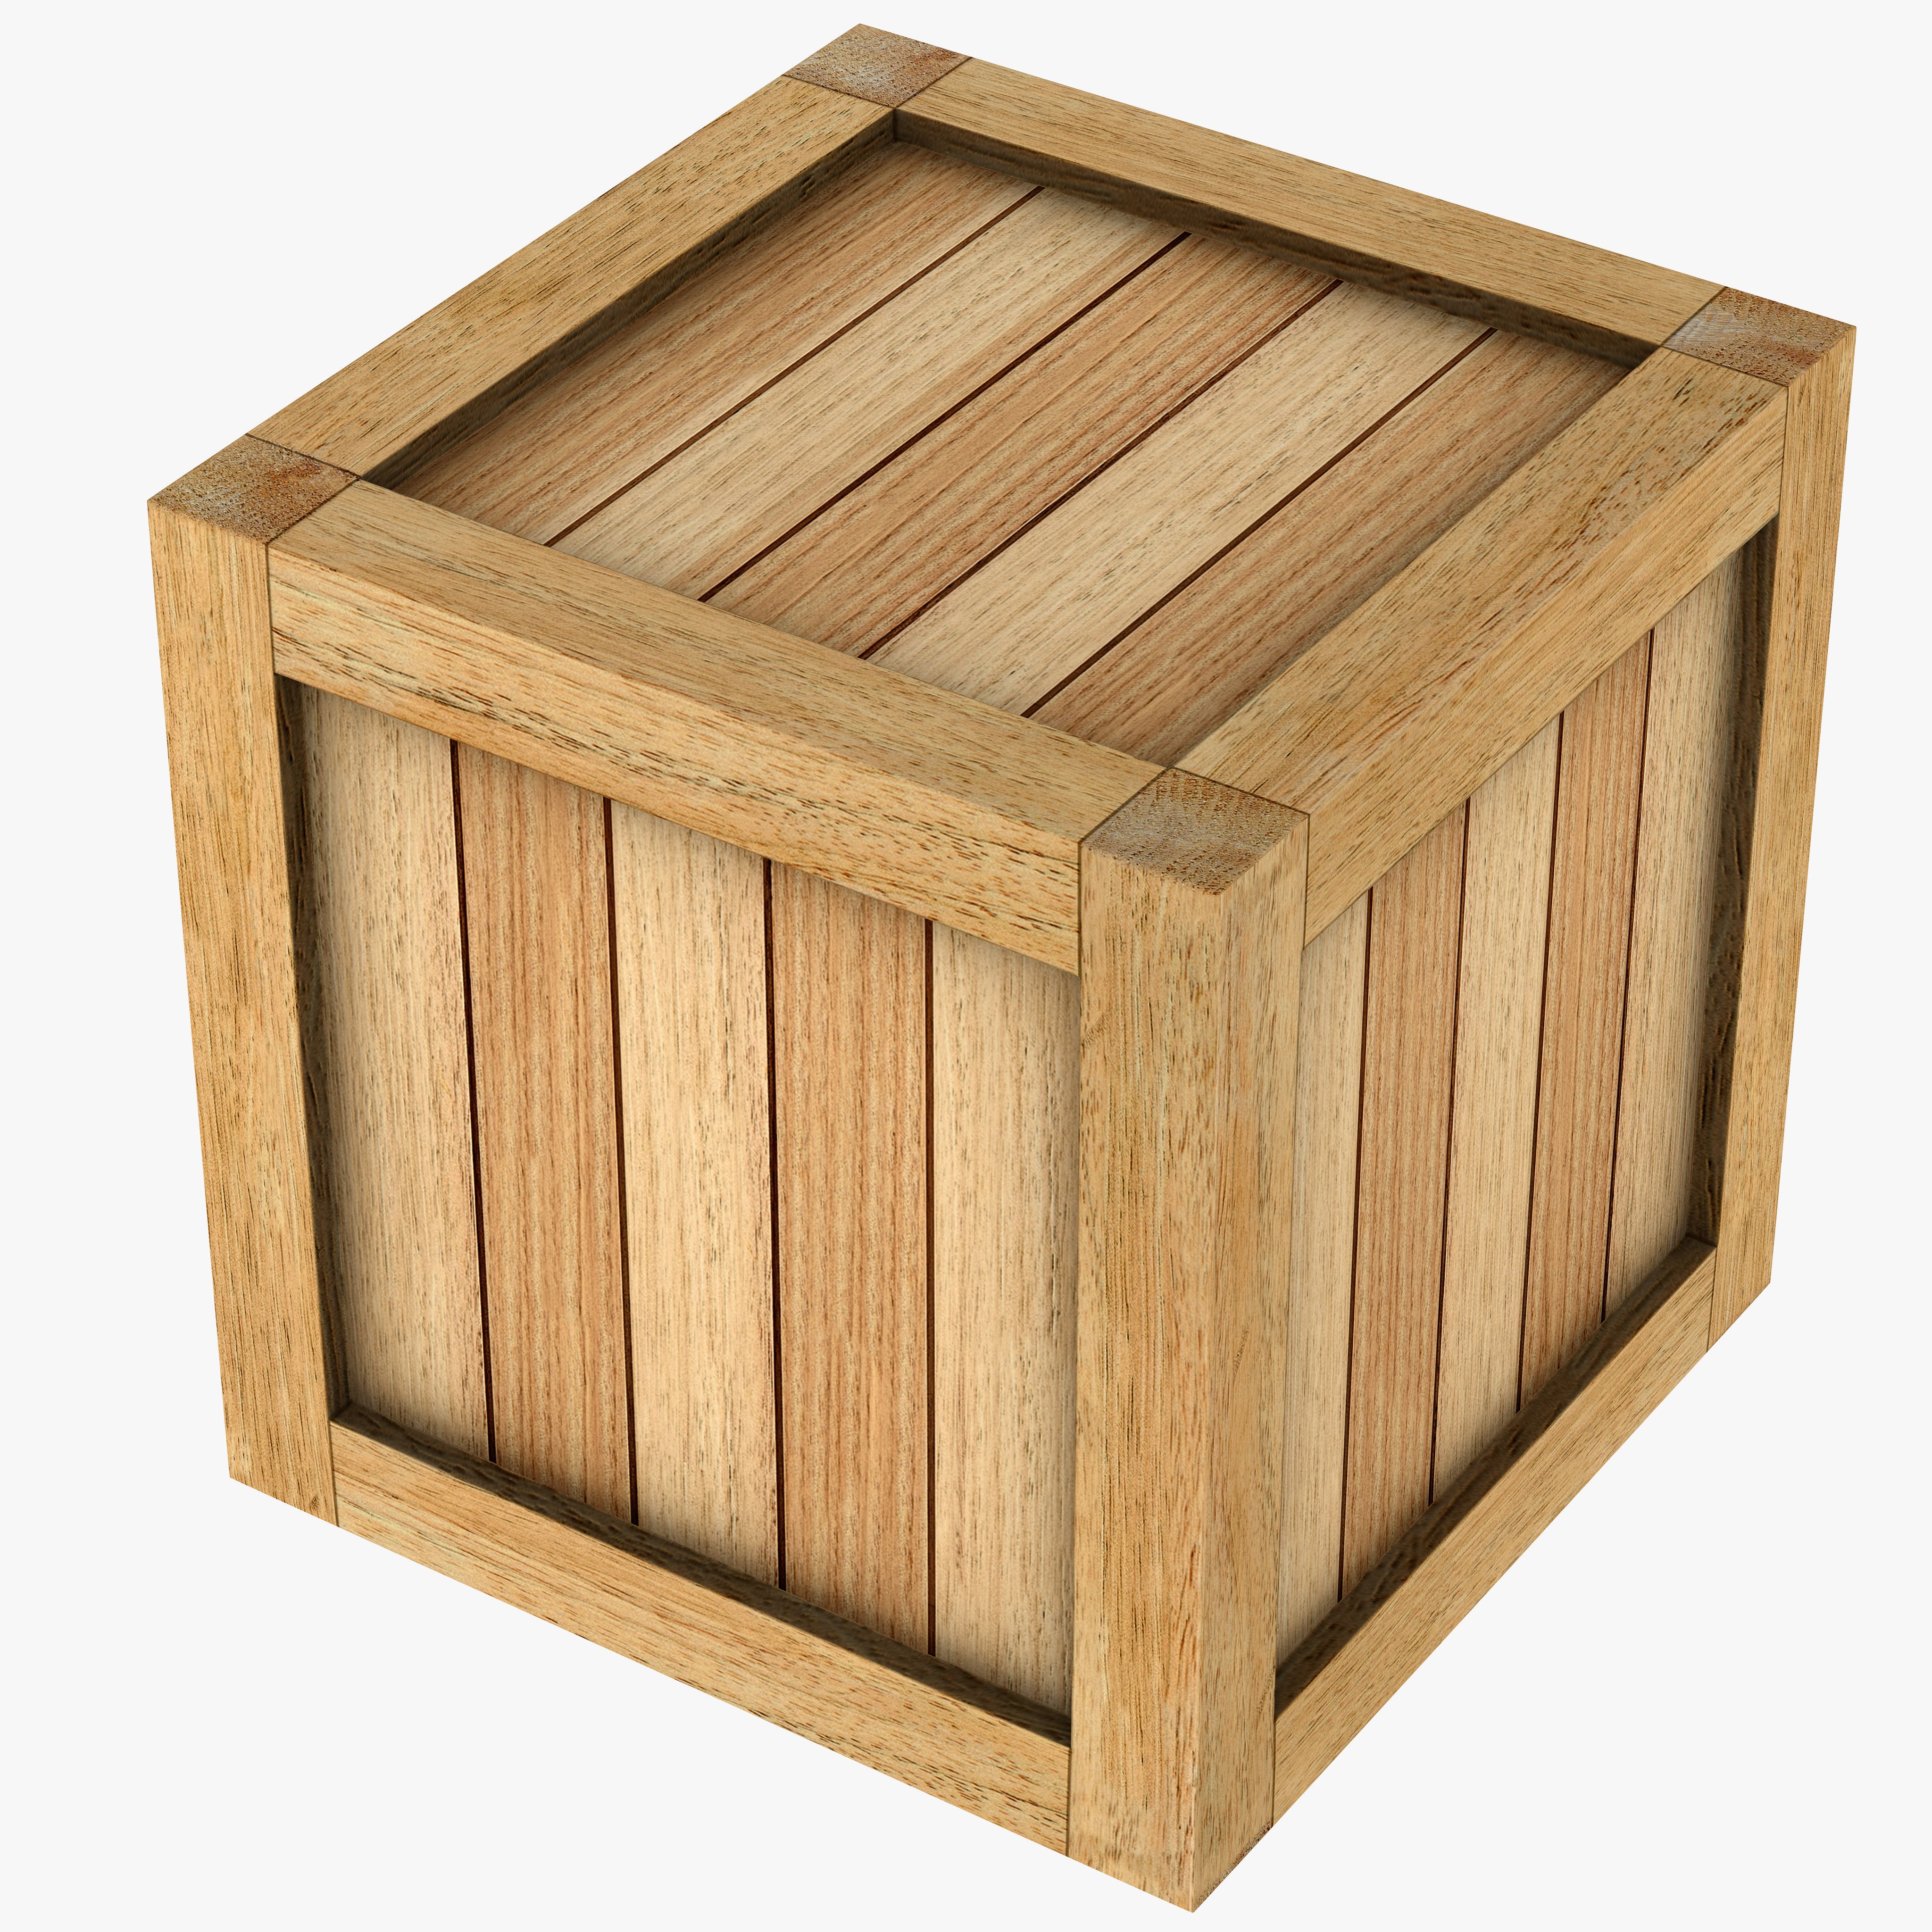 maya wooden box | box | Pinterest | Wood boxes, Box and Woods